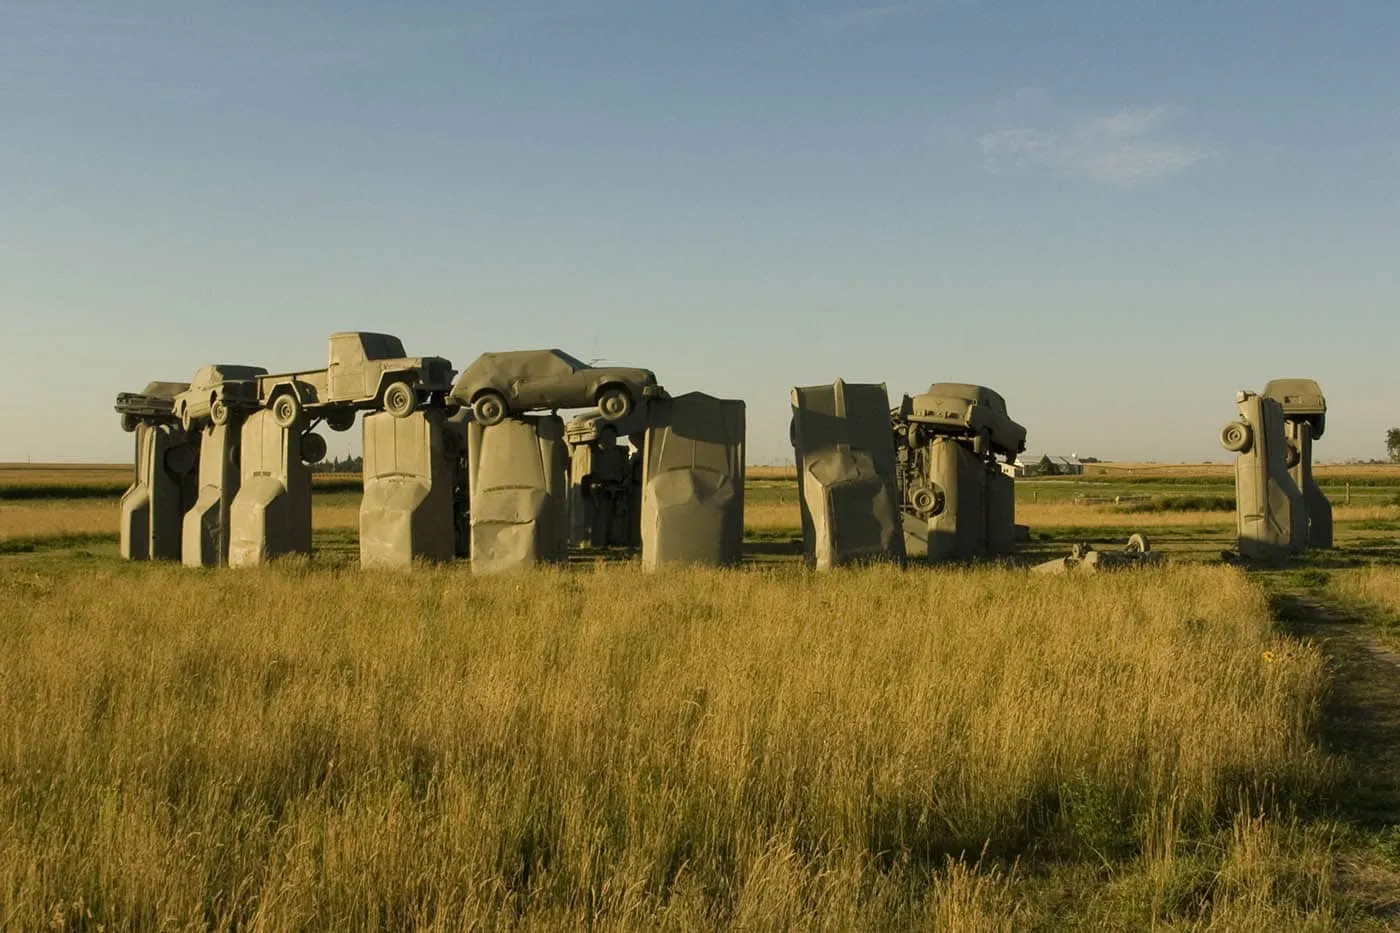 Carhenge, a Stonehenge replica made from cars, in Alliance, Nebraska - Roadside Attractions in Nebraska